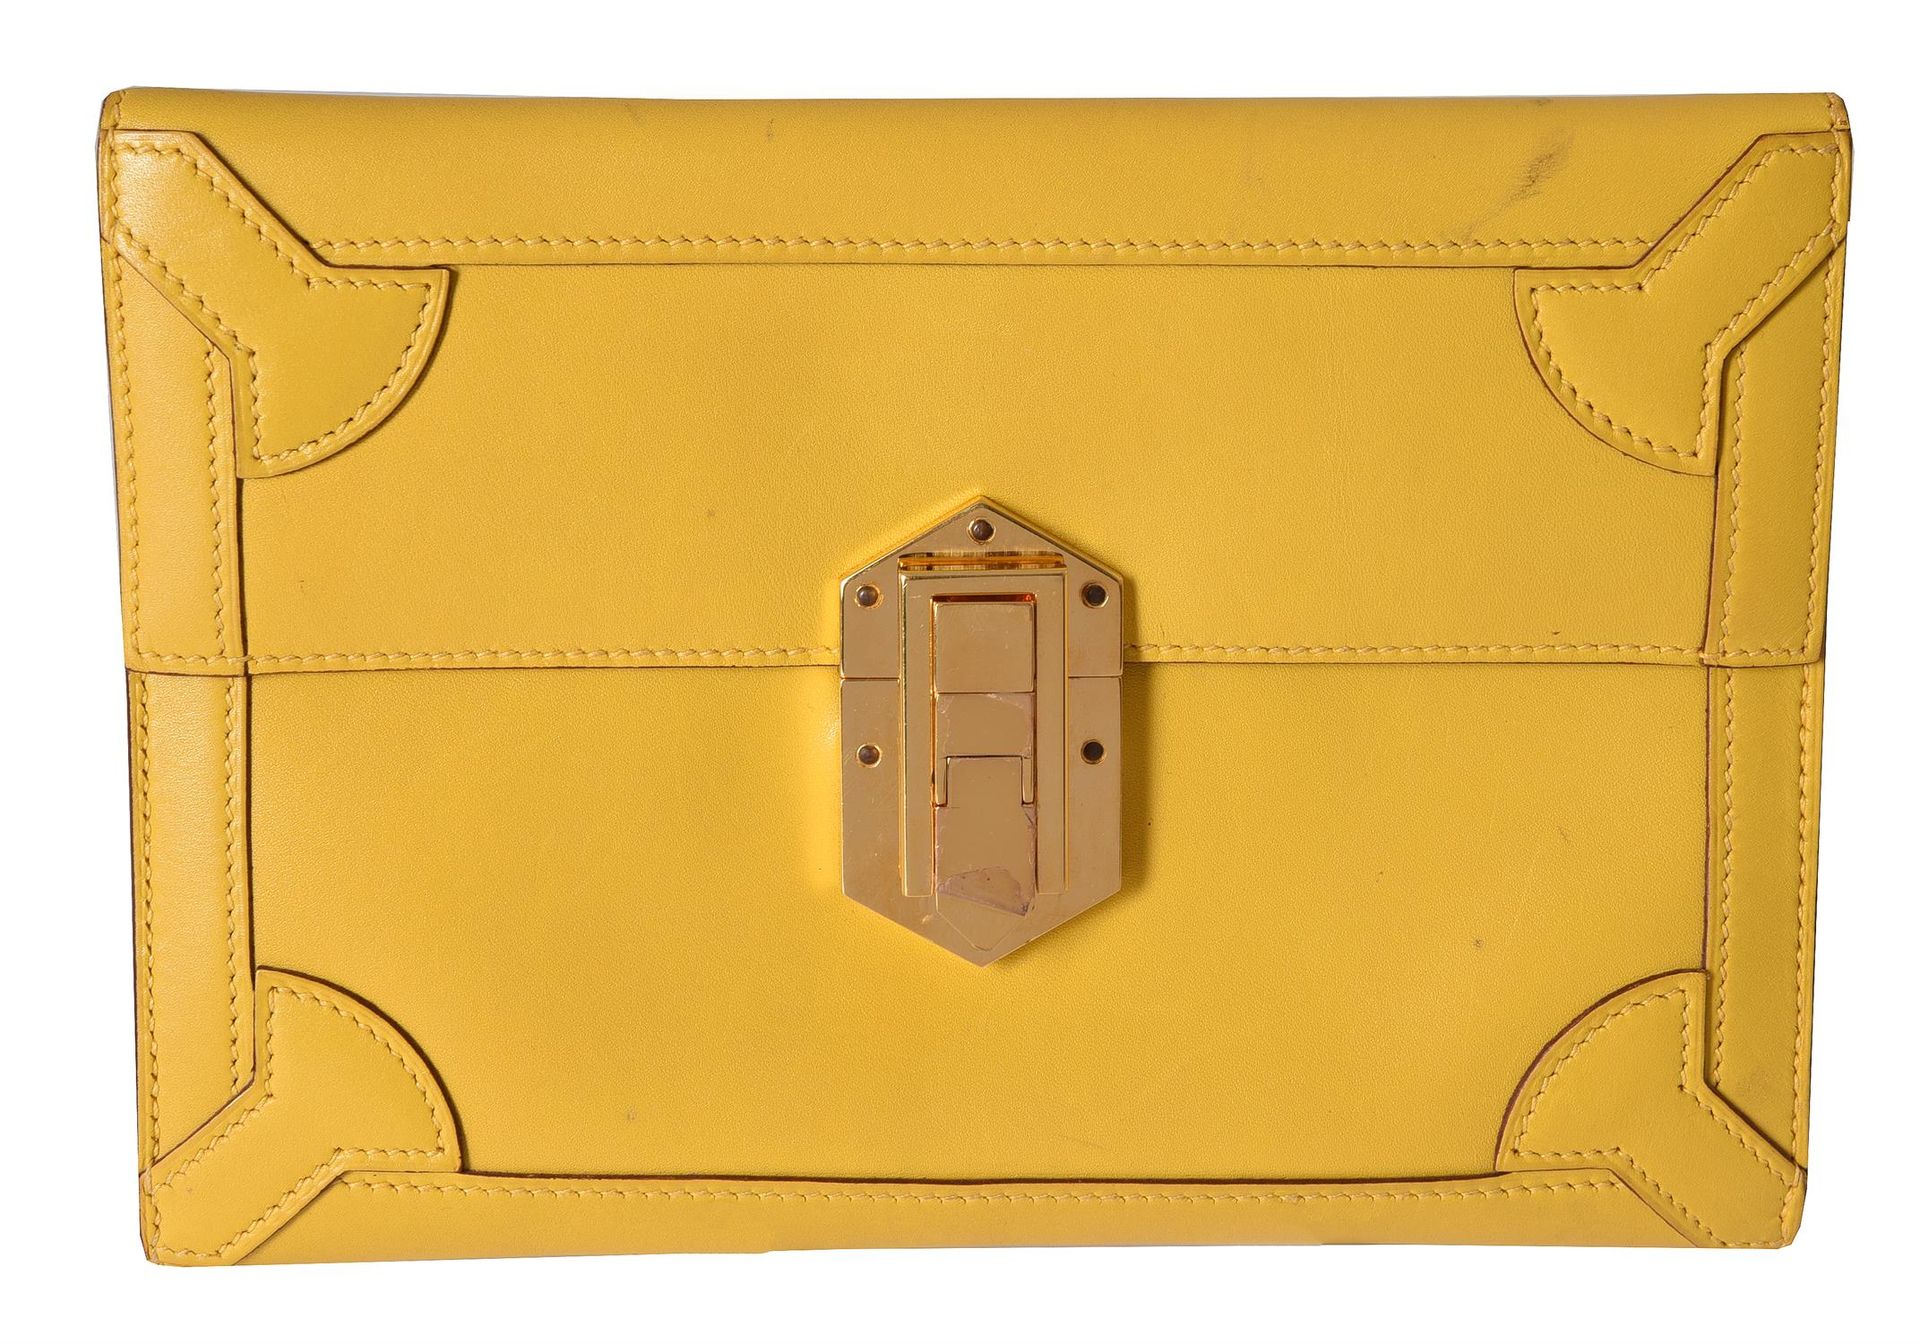 Hermes, a yellow leather clutch bag Hermes, una pochette in pelle gialla, con un&hellip;